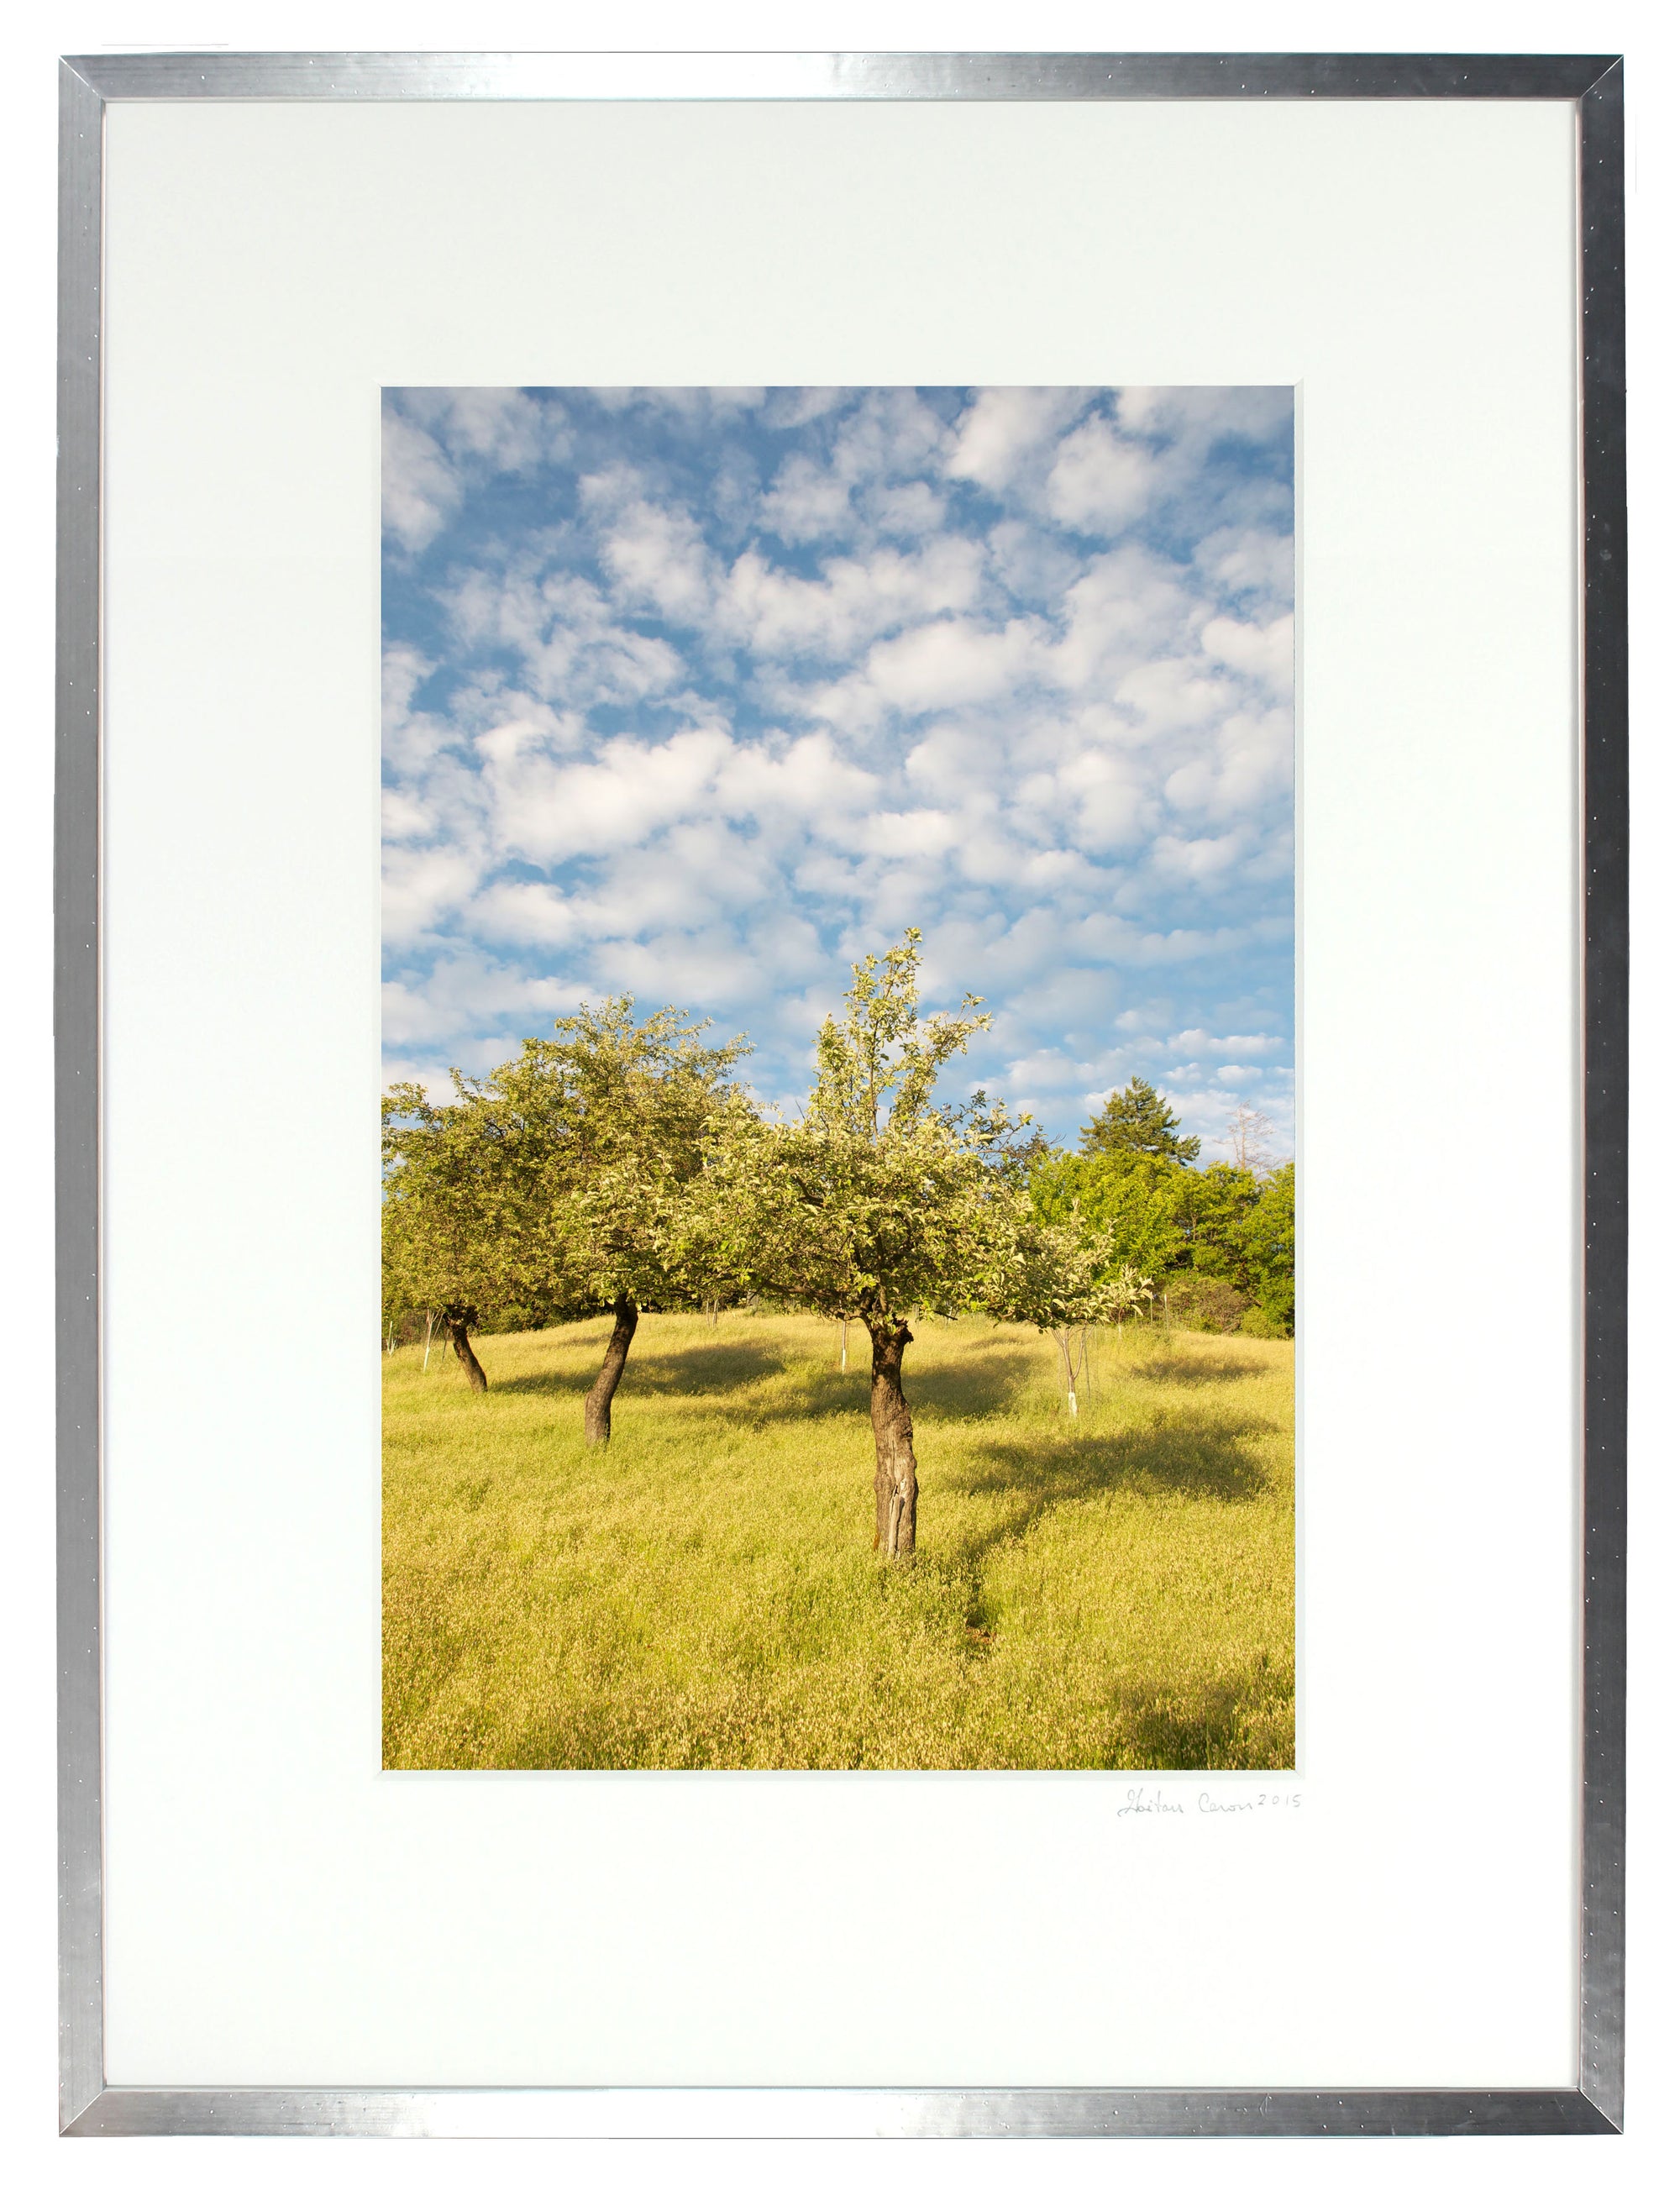 <I>The Three Sisters (Apple Tree)</I><br>Mendocino, California, 2011<br><br>GC0044